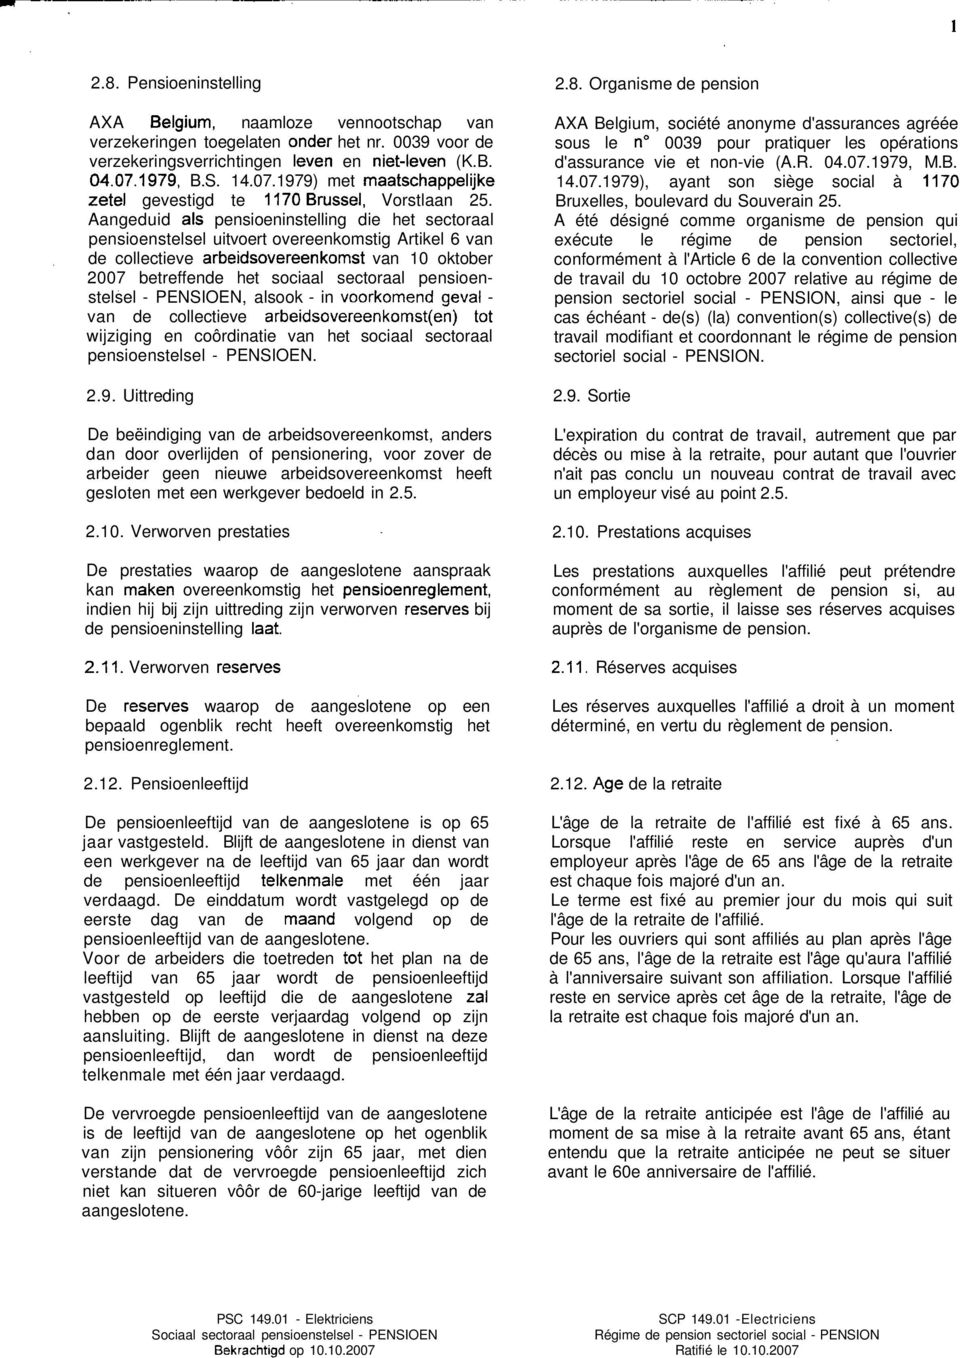 Aangeduid als pensioeninstelling die het sectoraal pensioenstelsel uitvoert overeenkomstig Artikel 6 van de collectieve arbeidsovereenkomst van 10 oktober 2007 betreffende het sociaal sectoraal